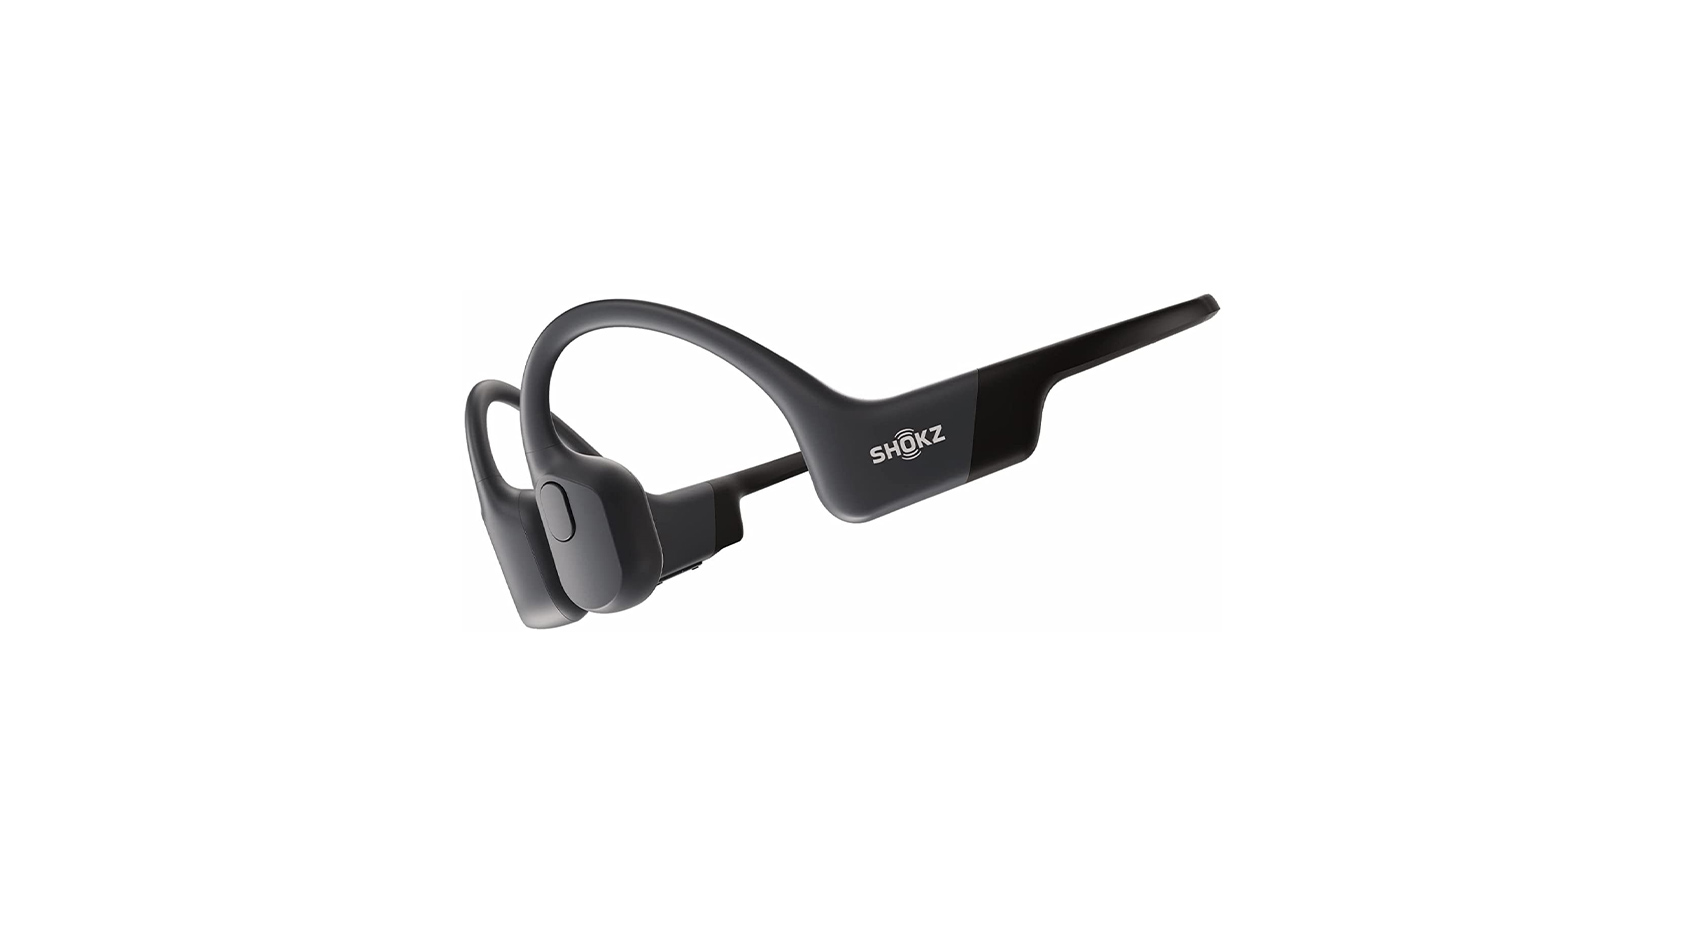 The Shokz OpenRun bone conduction headphones in black against a white background.